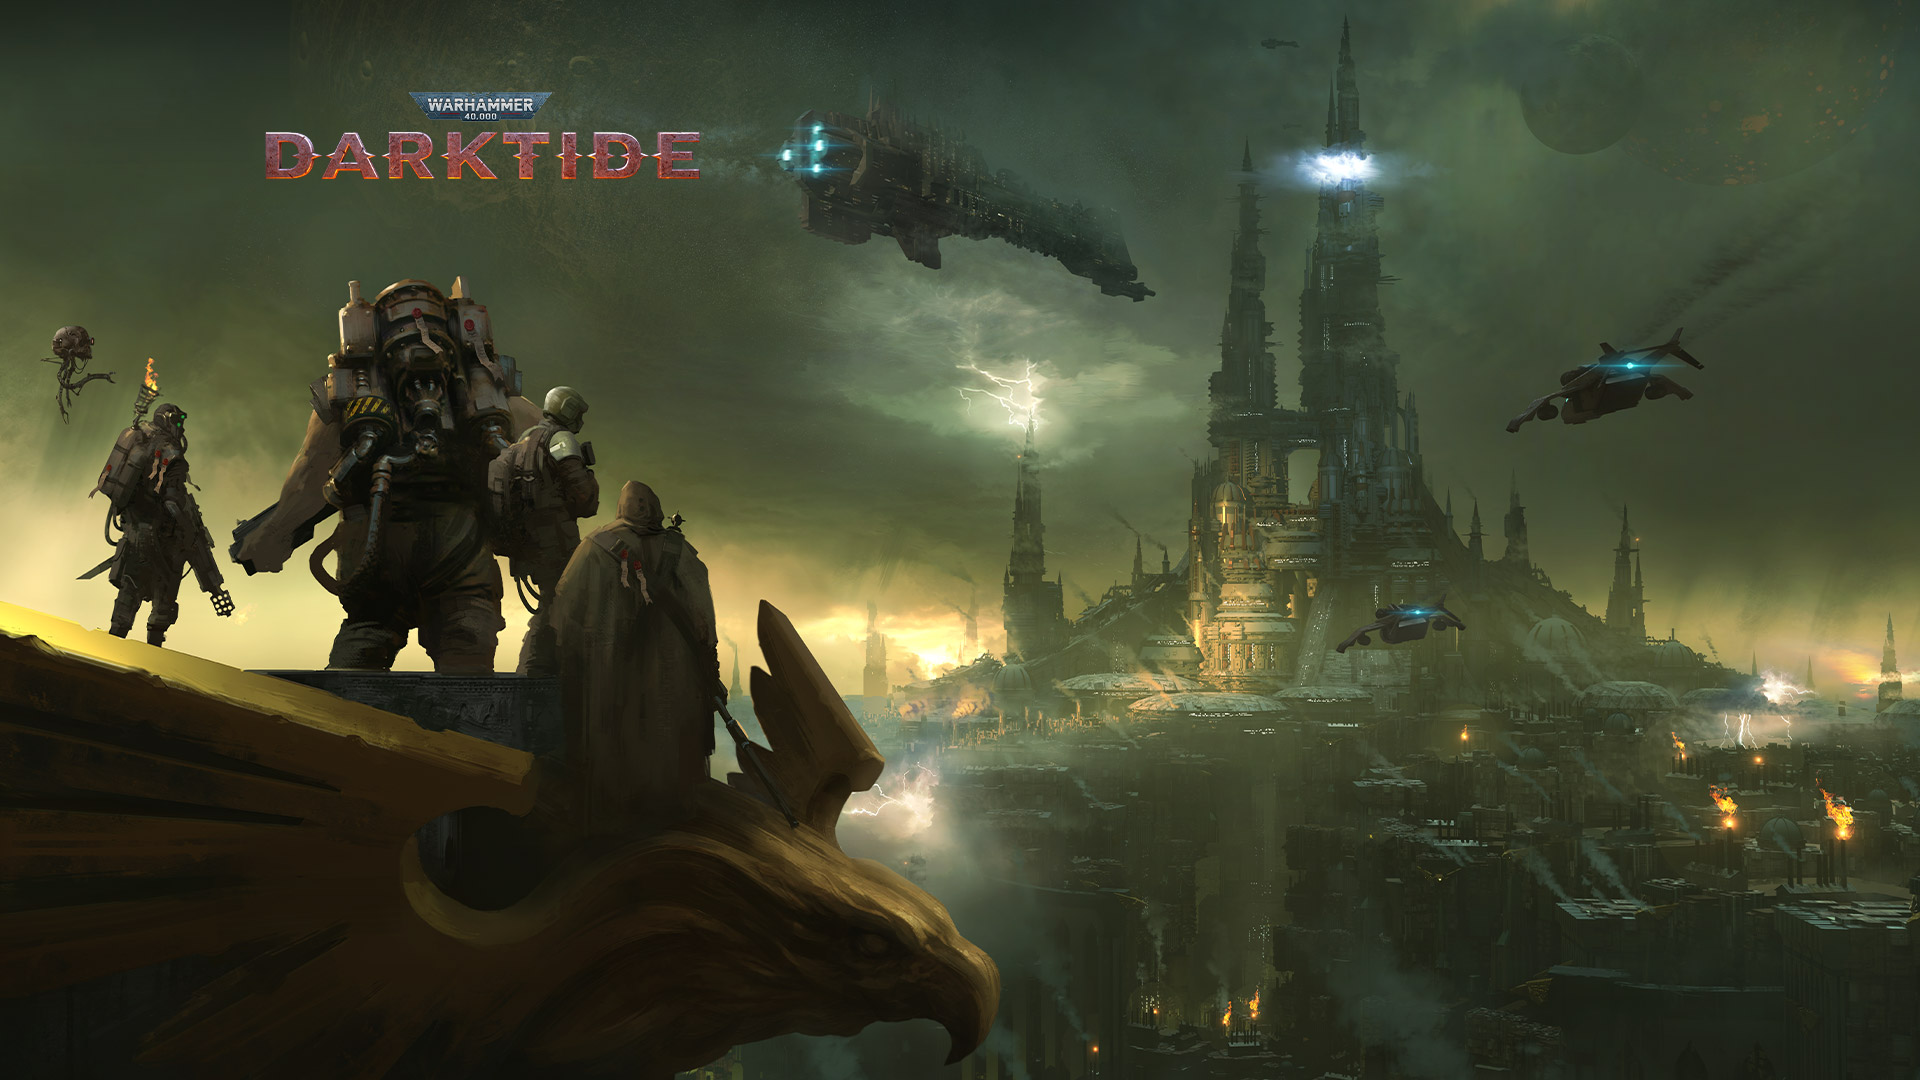 Warhammer 40 000 Darktide, skupina postav s výhledem na město zahalené v mlze